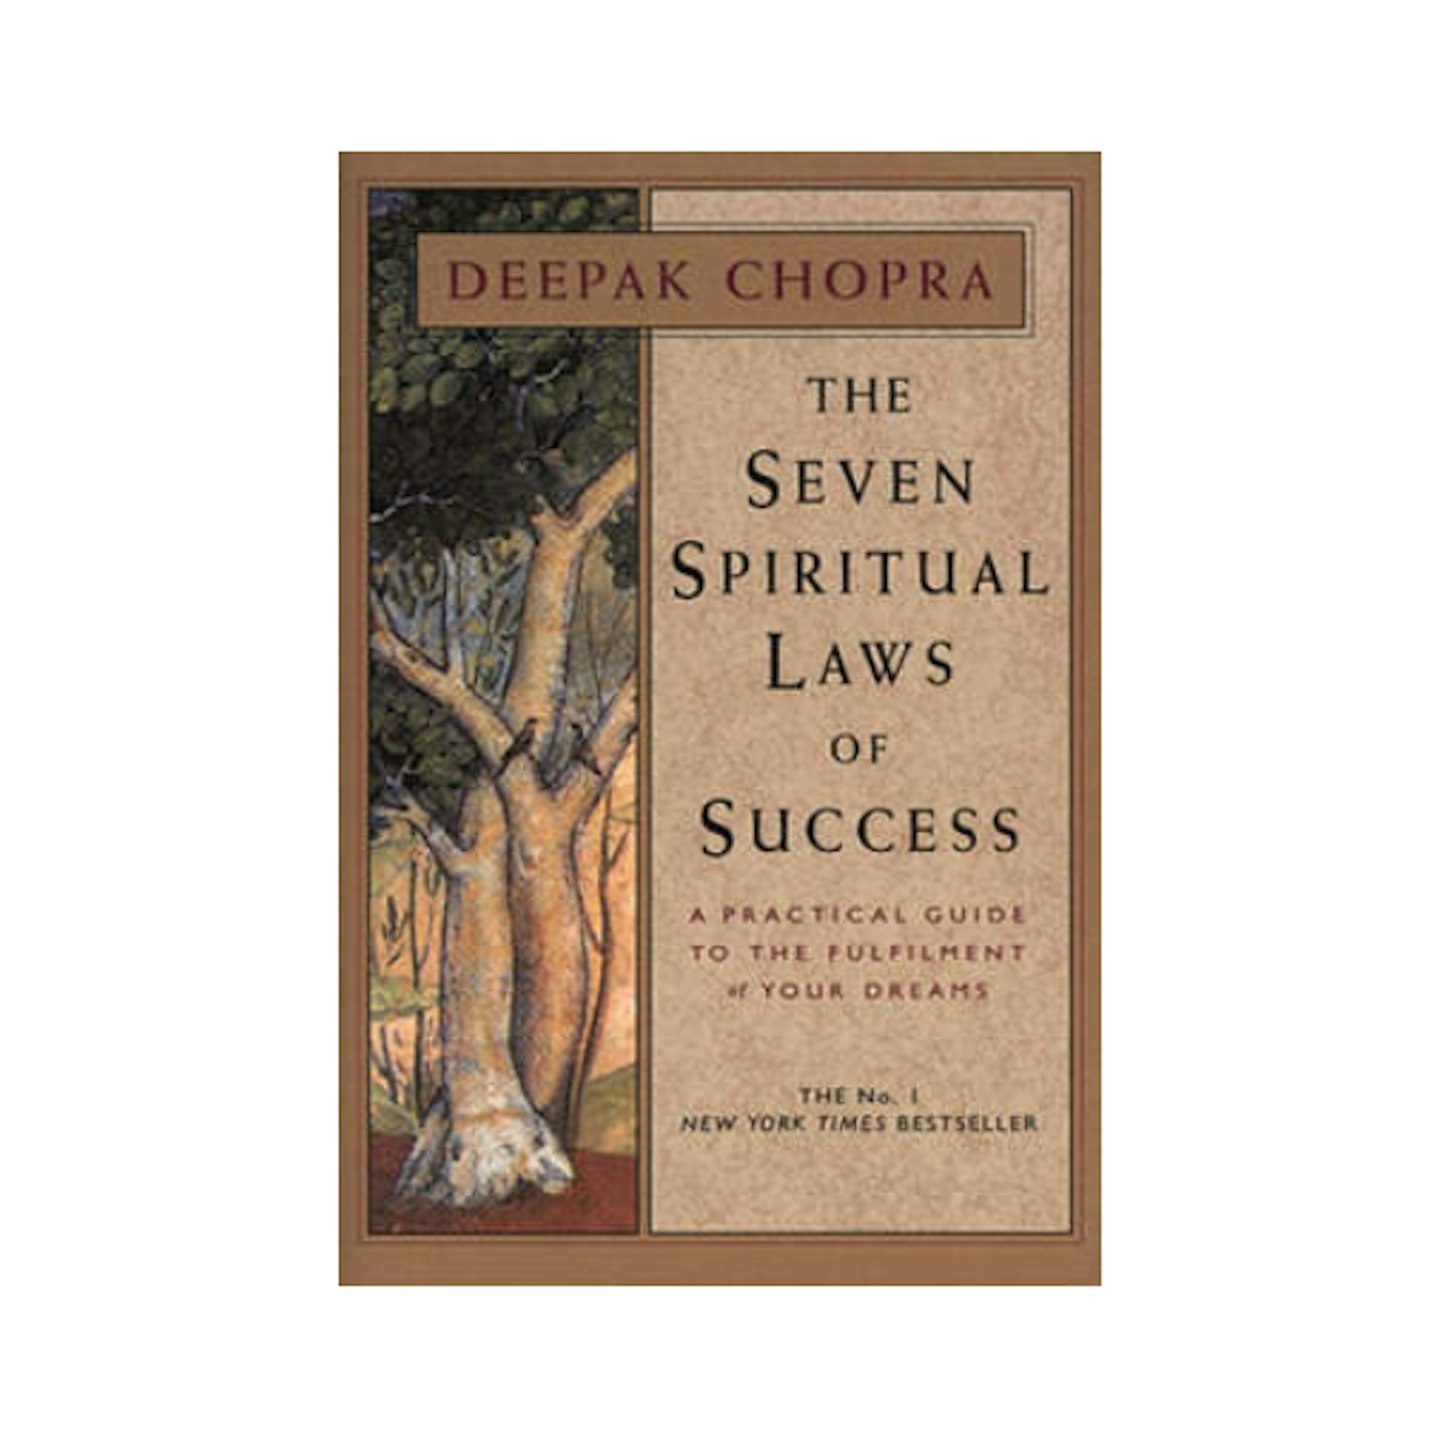 The Seven Spiritual Laws of Success book cover